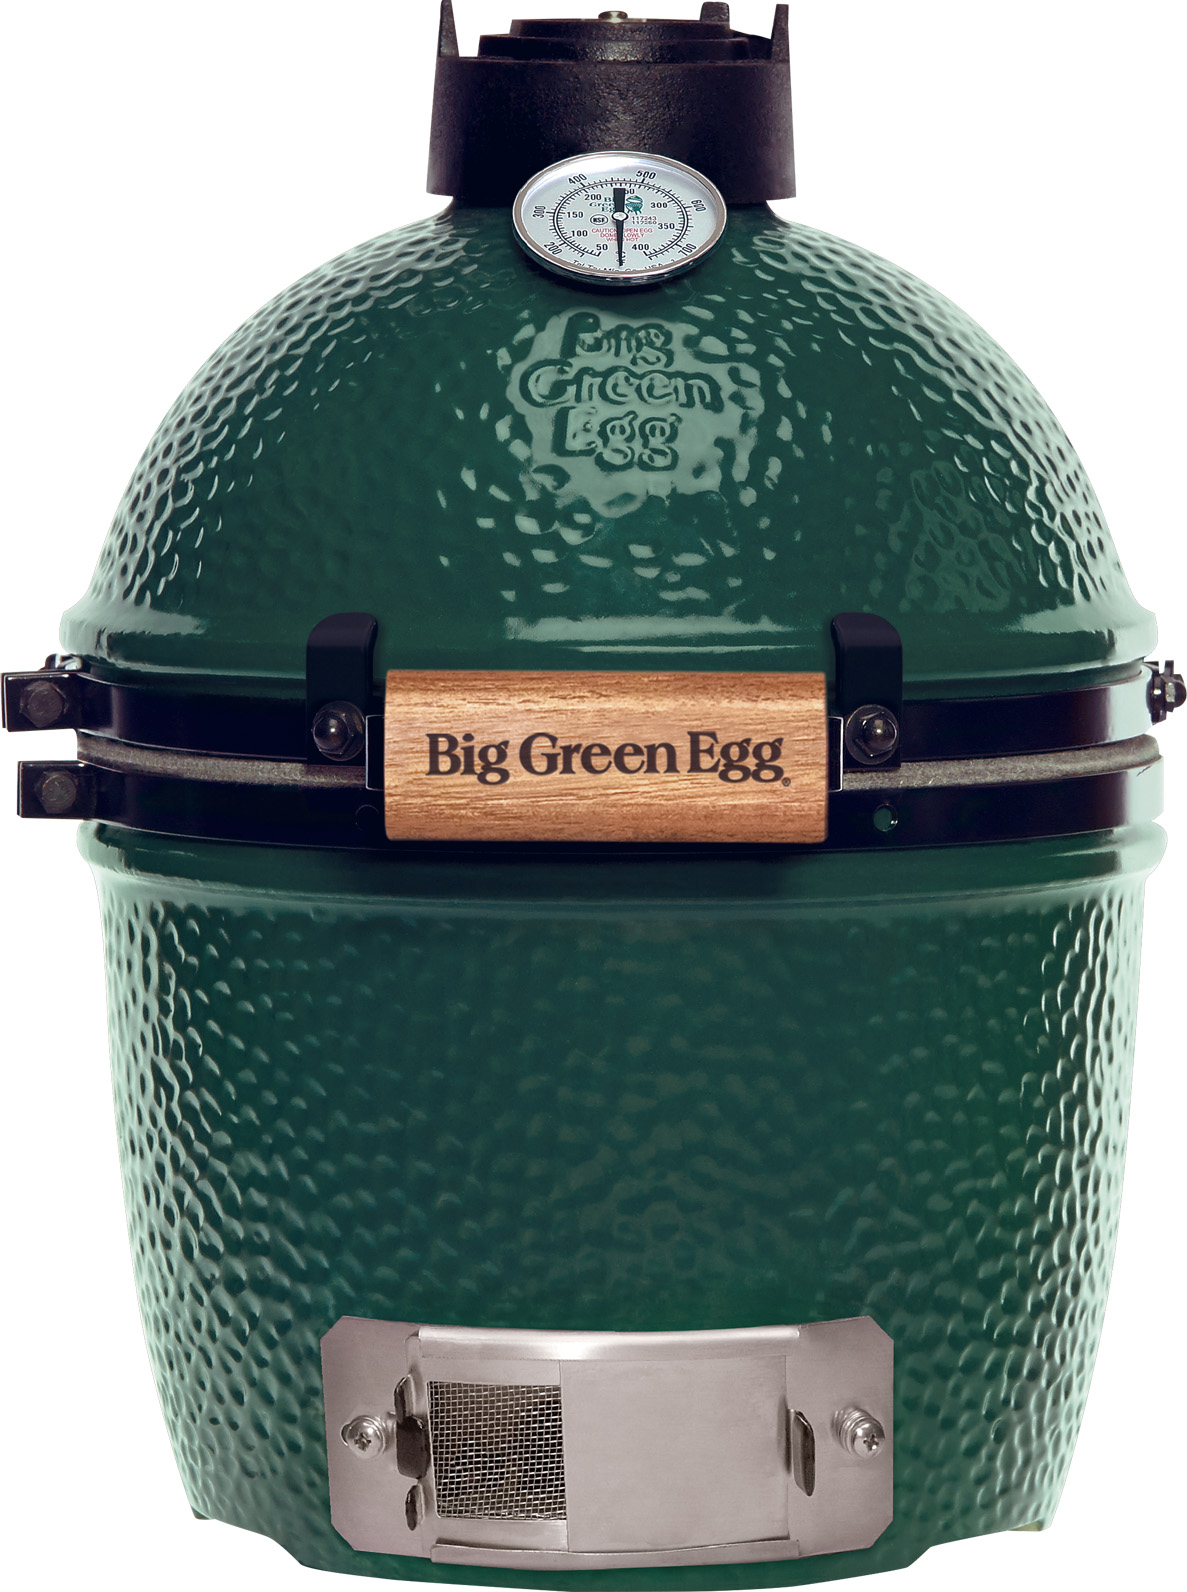 Big Green Egg Mini kopen